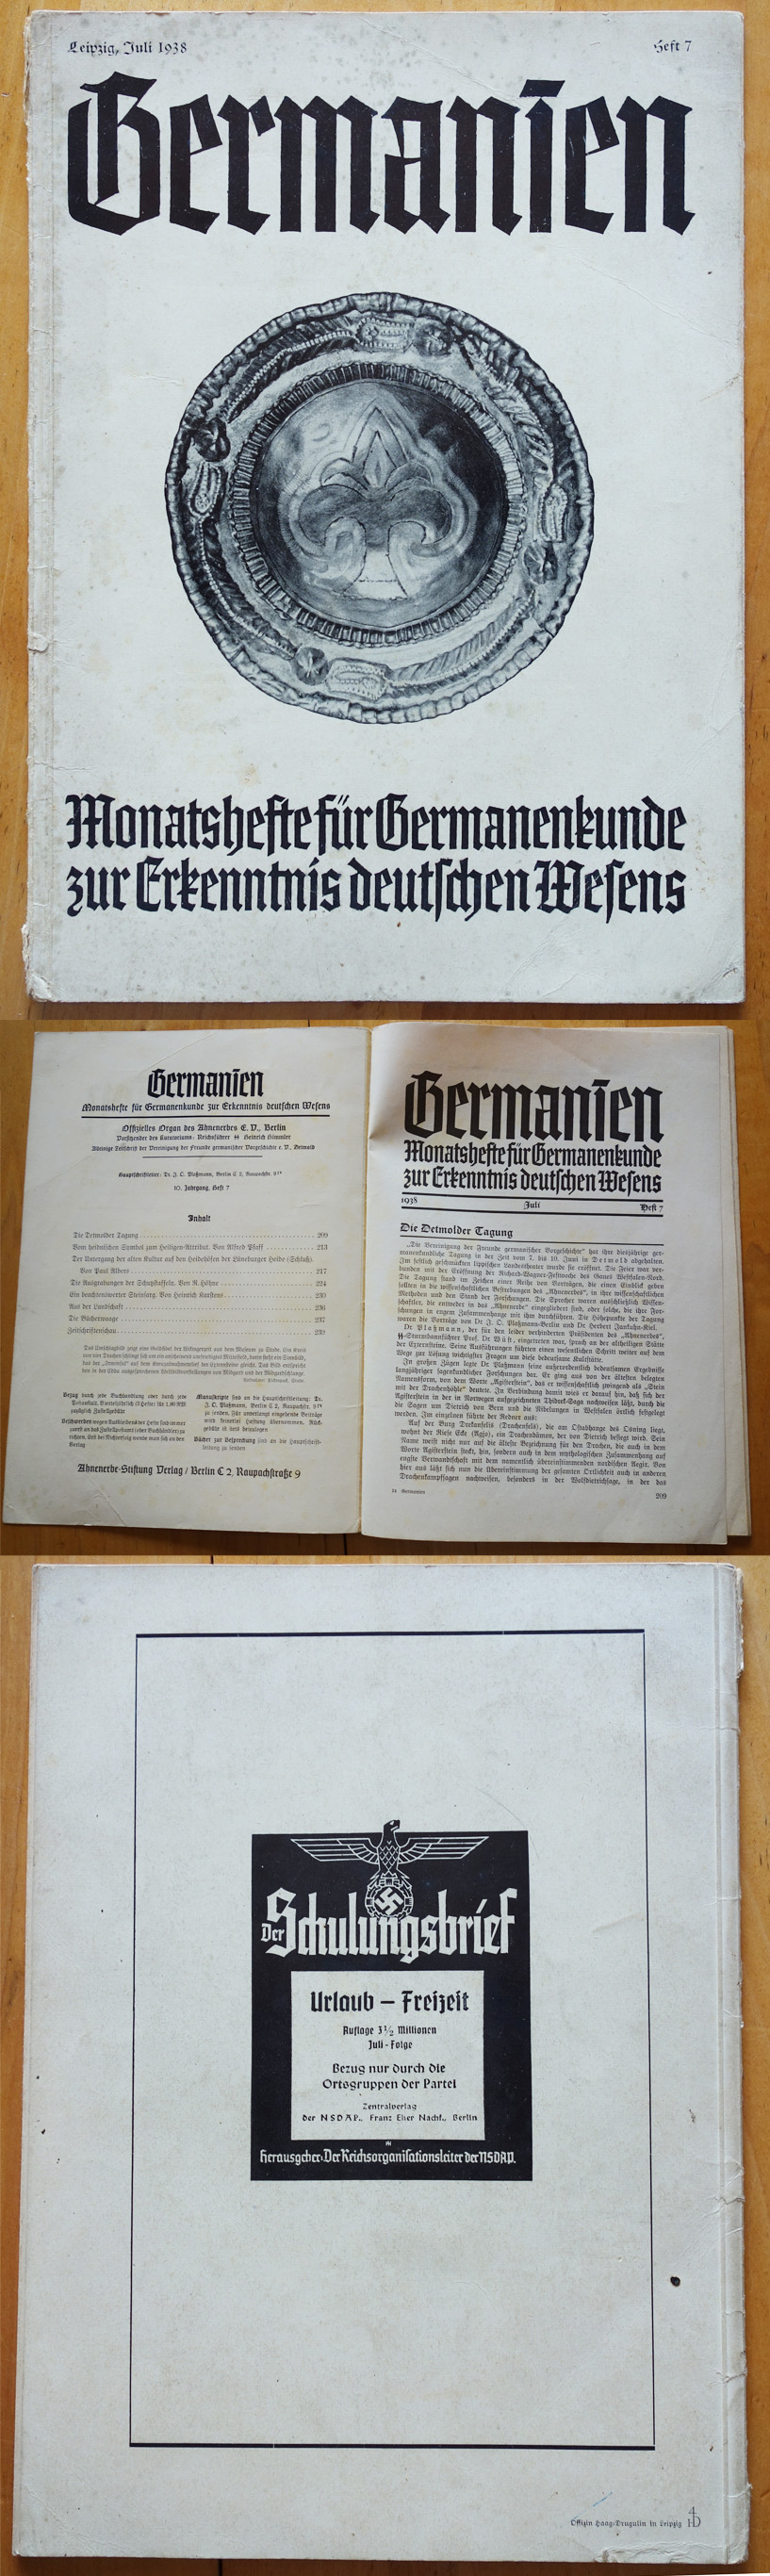 Booklet Germanien, July 1938, Issue 7